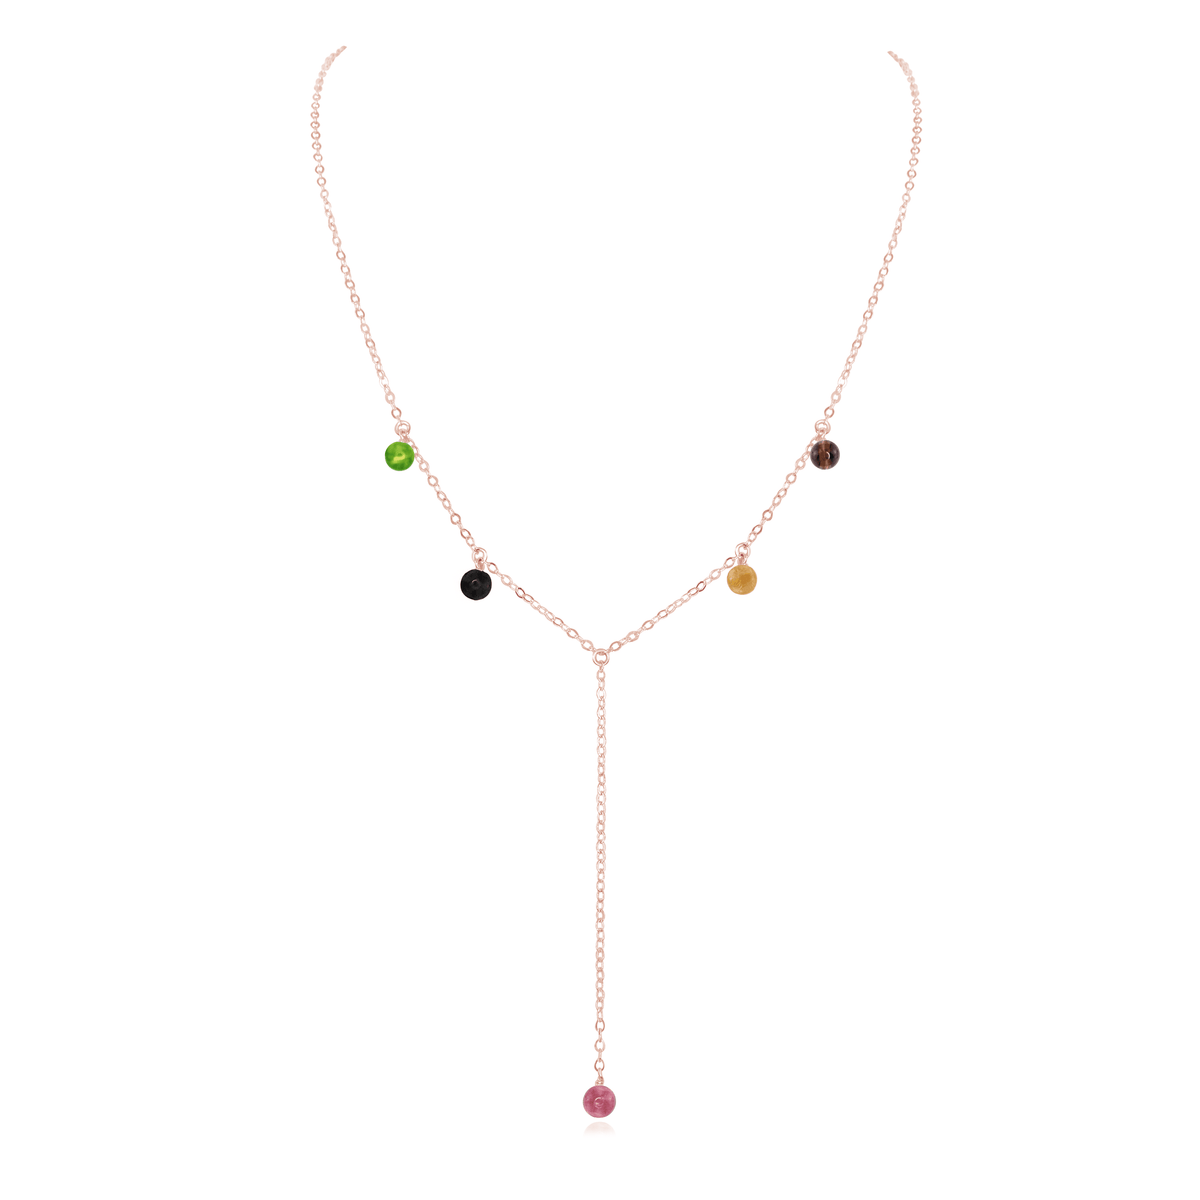 Rainbow Tourmaline Boho Lariat Necklace - Rainbow Tourmaline Boho Lariat Necklace - 14k Rose Gold Fill - Luna Tide Handmade Crystal Jewellery